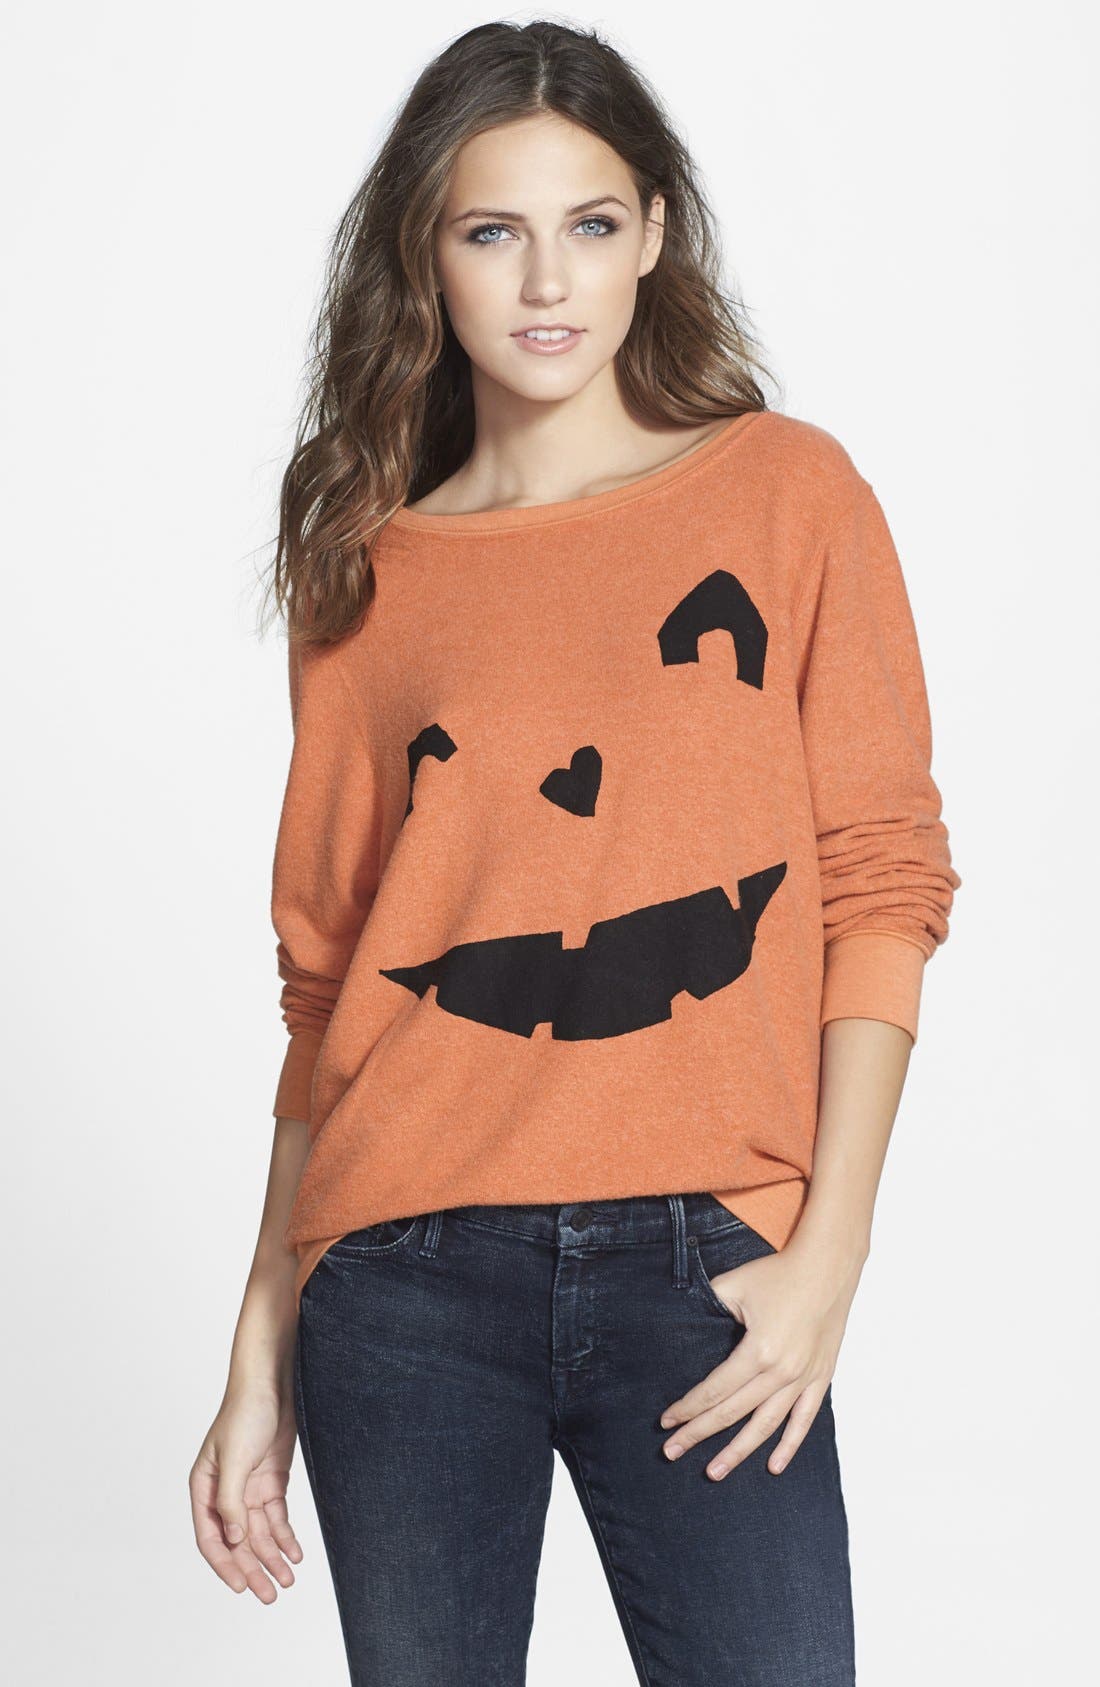 wildfox pumpkin sweatshirt